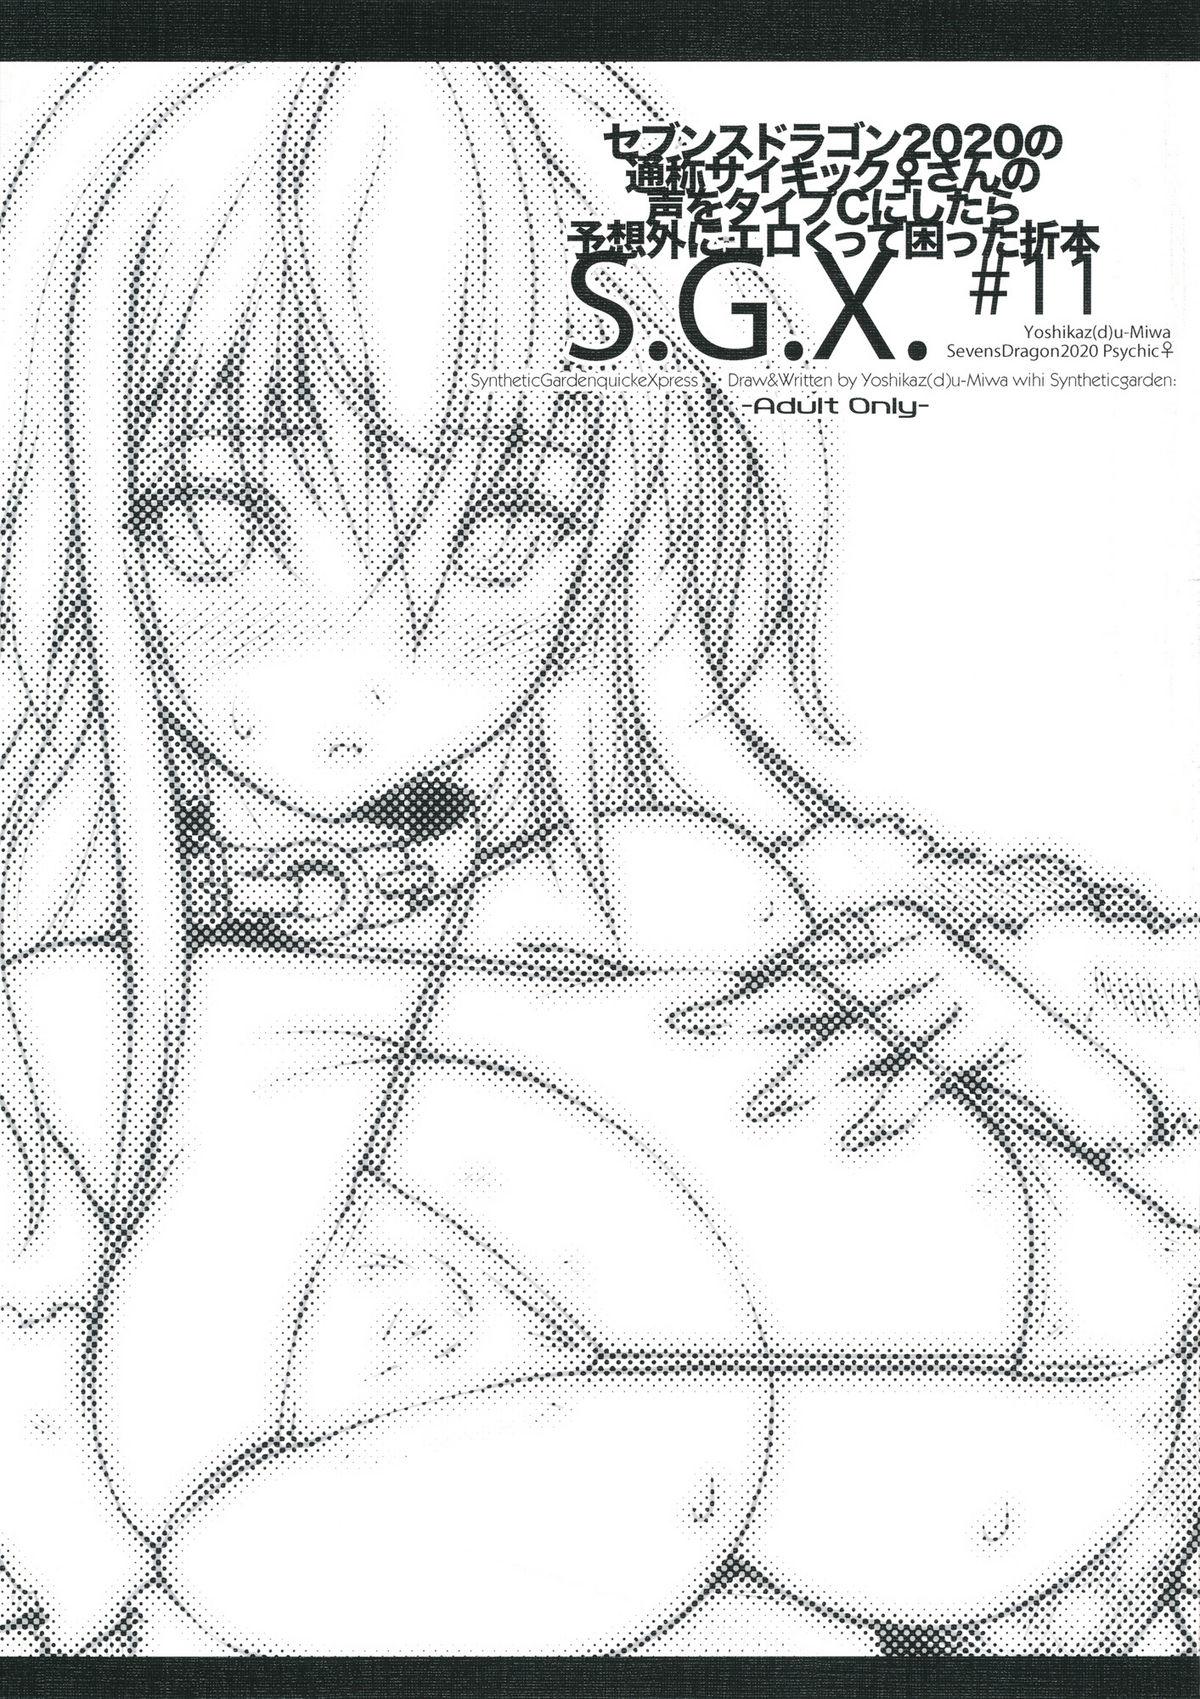 Perfect Butt S.G.X. #11 - 7th dragon Sex Massage - Picture 1